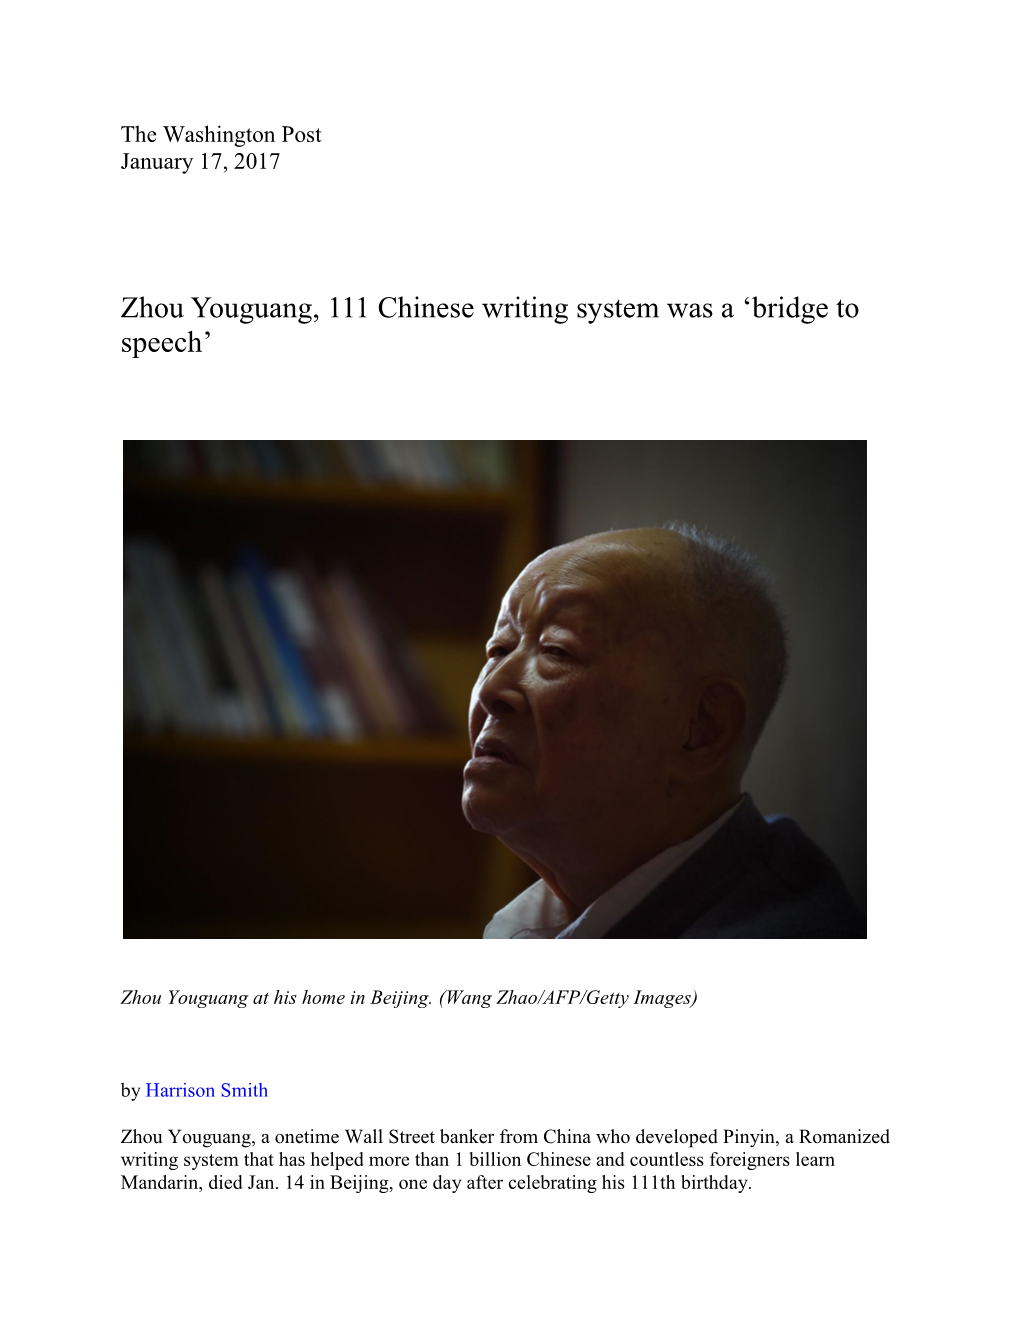 Zhou Youguang, 111 Chinese Writing System Was a 'Bridge to Speech'